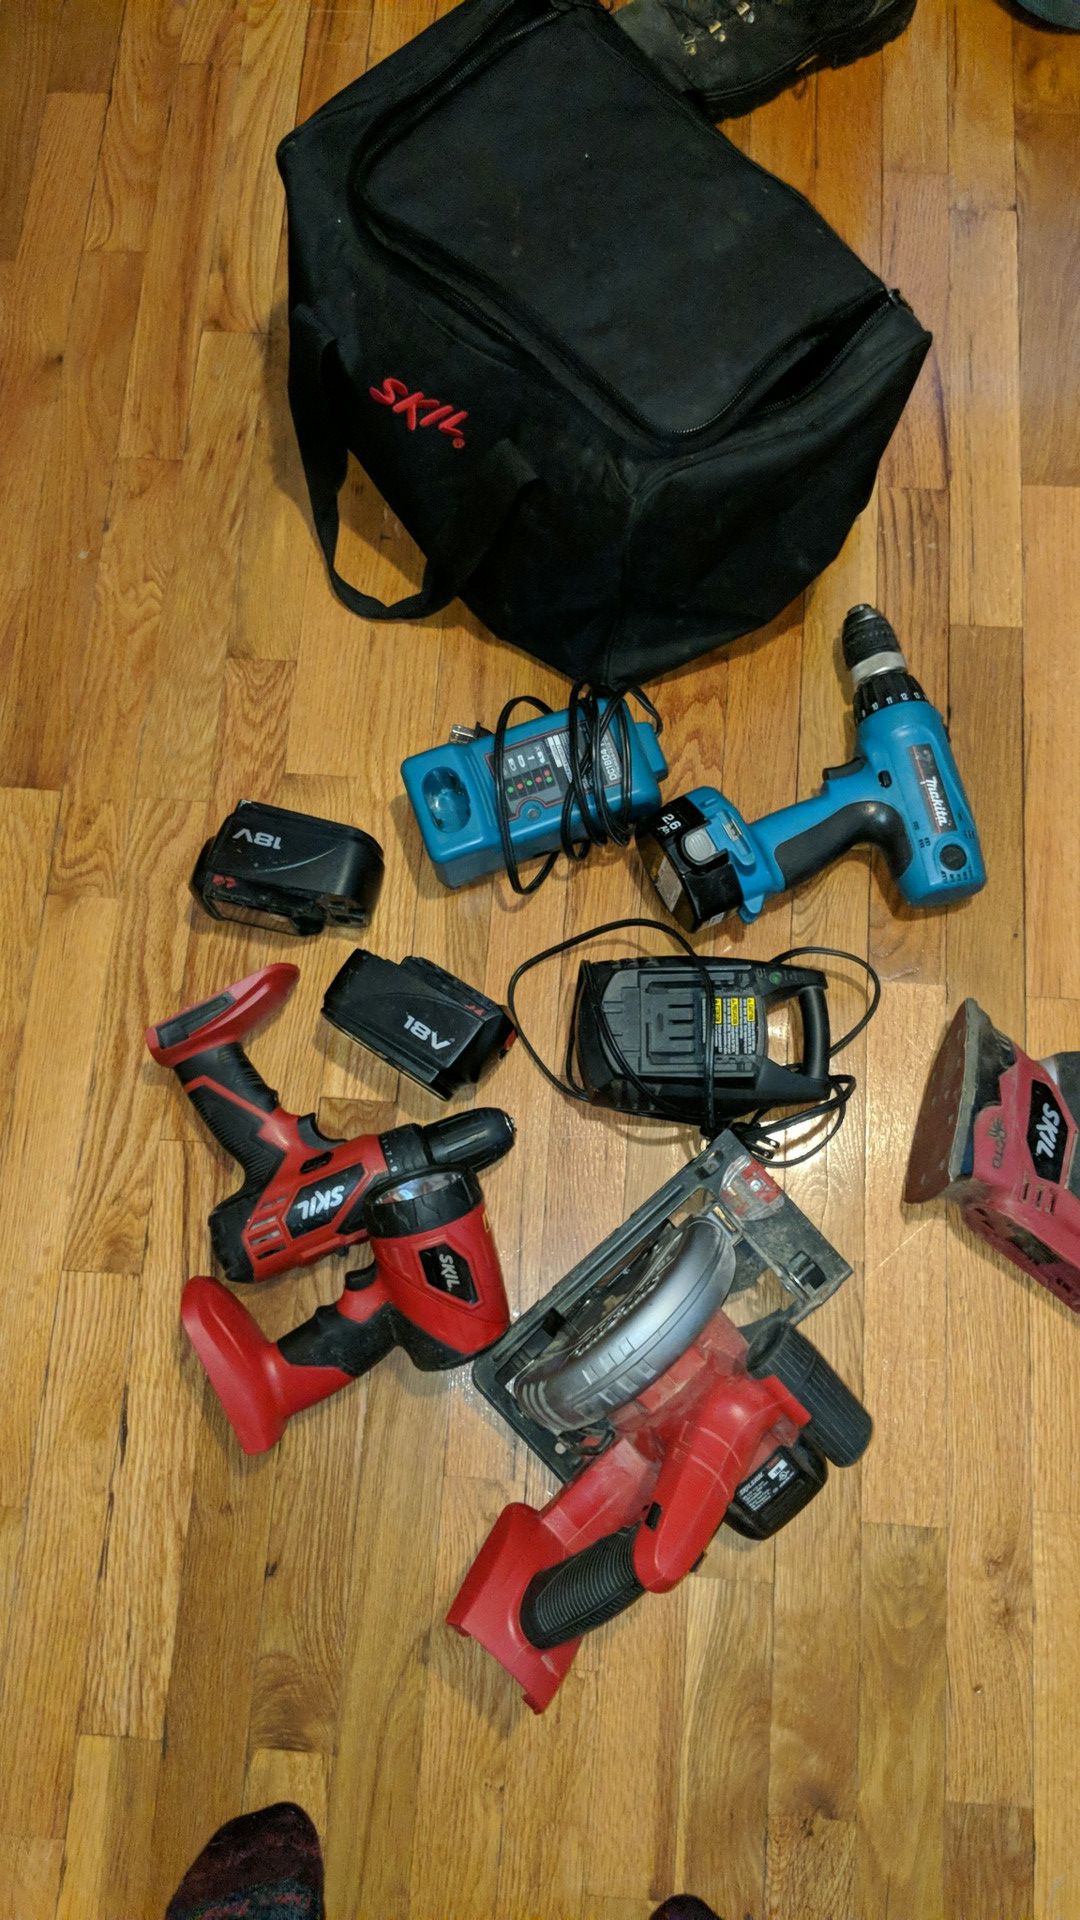 Bag of tools